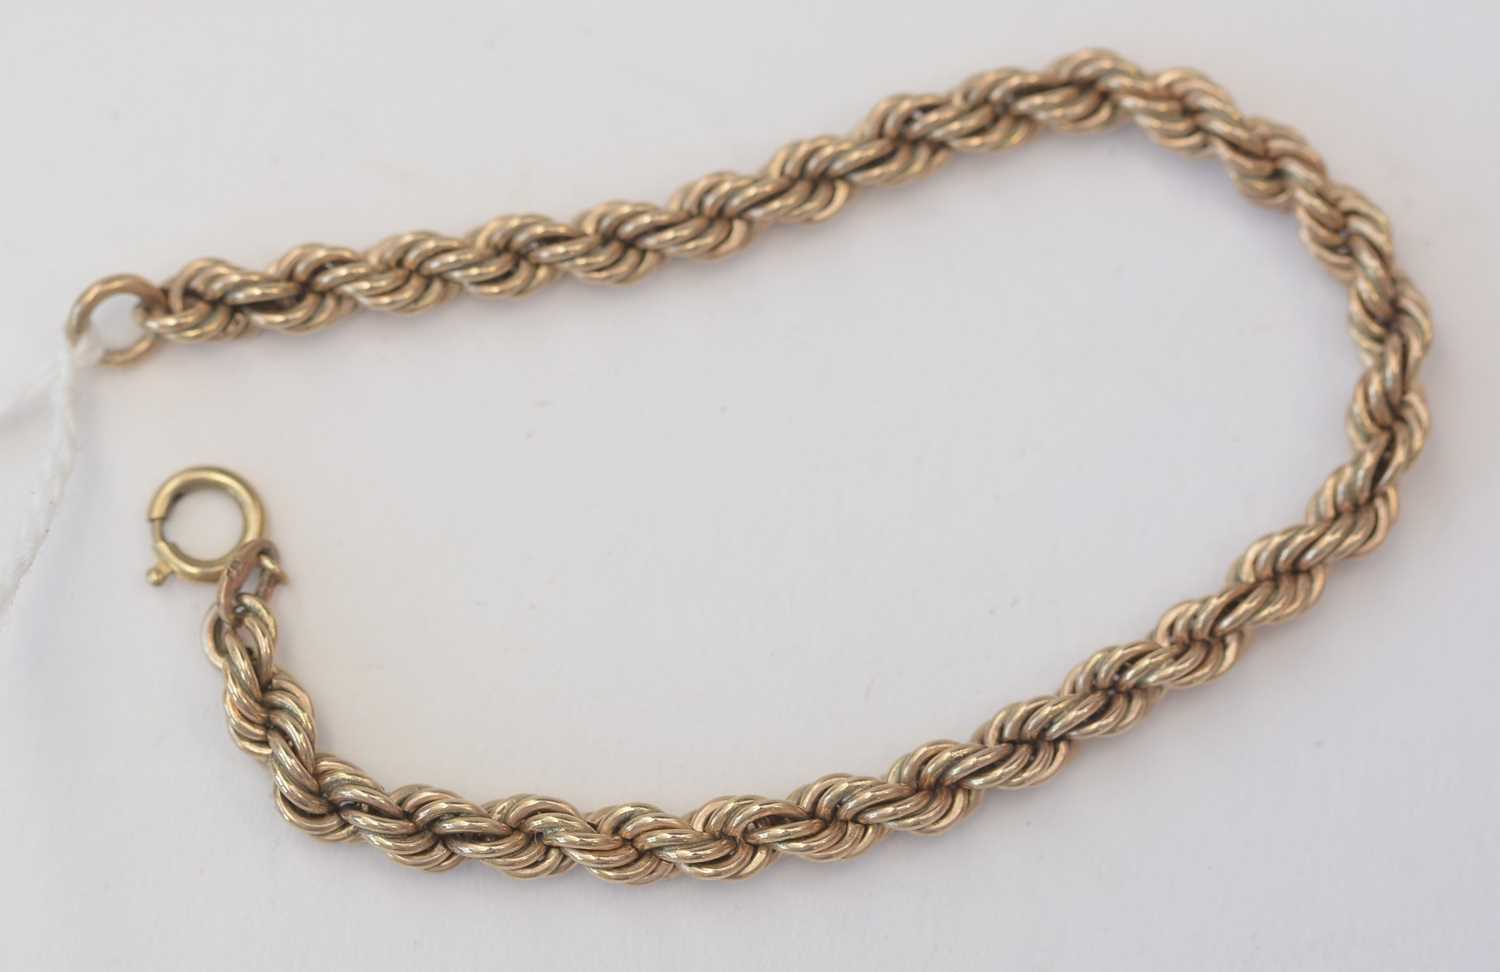 A 9ct yellow gold twist link bracelet